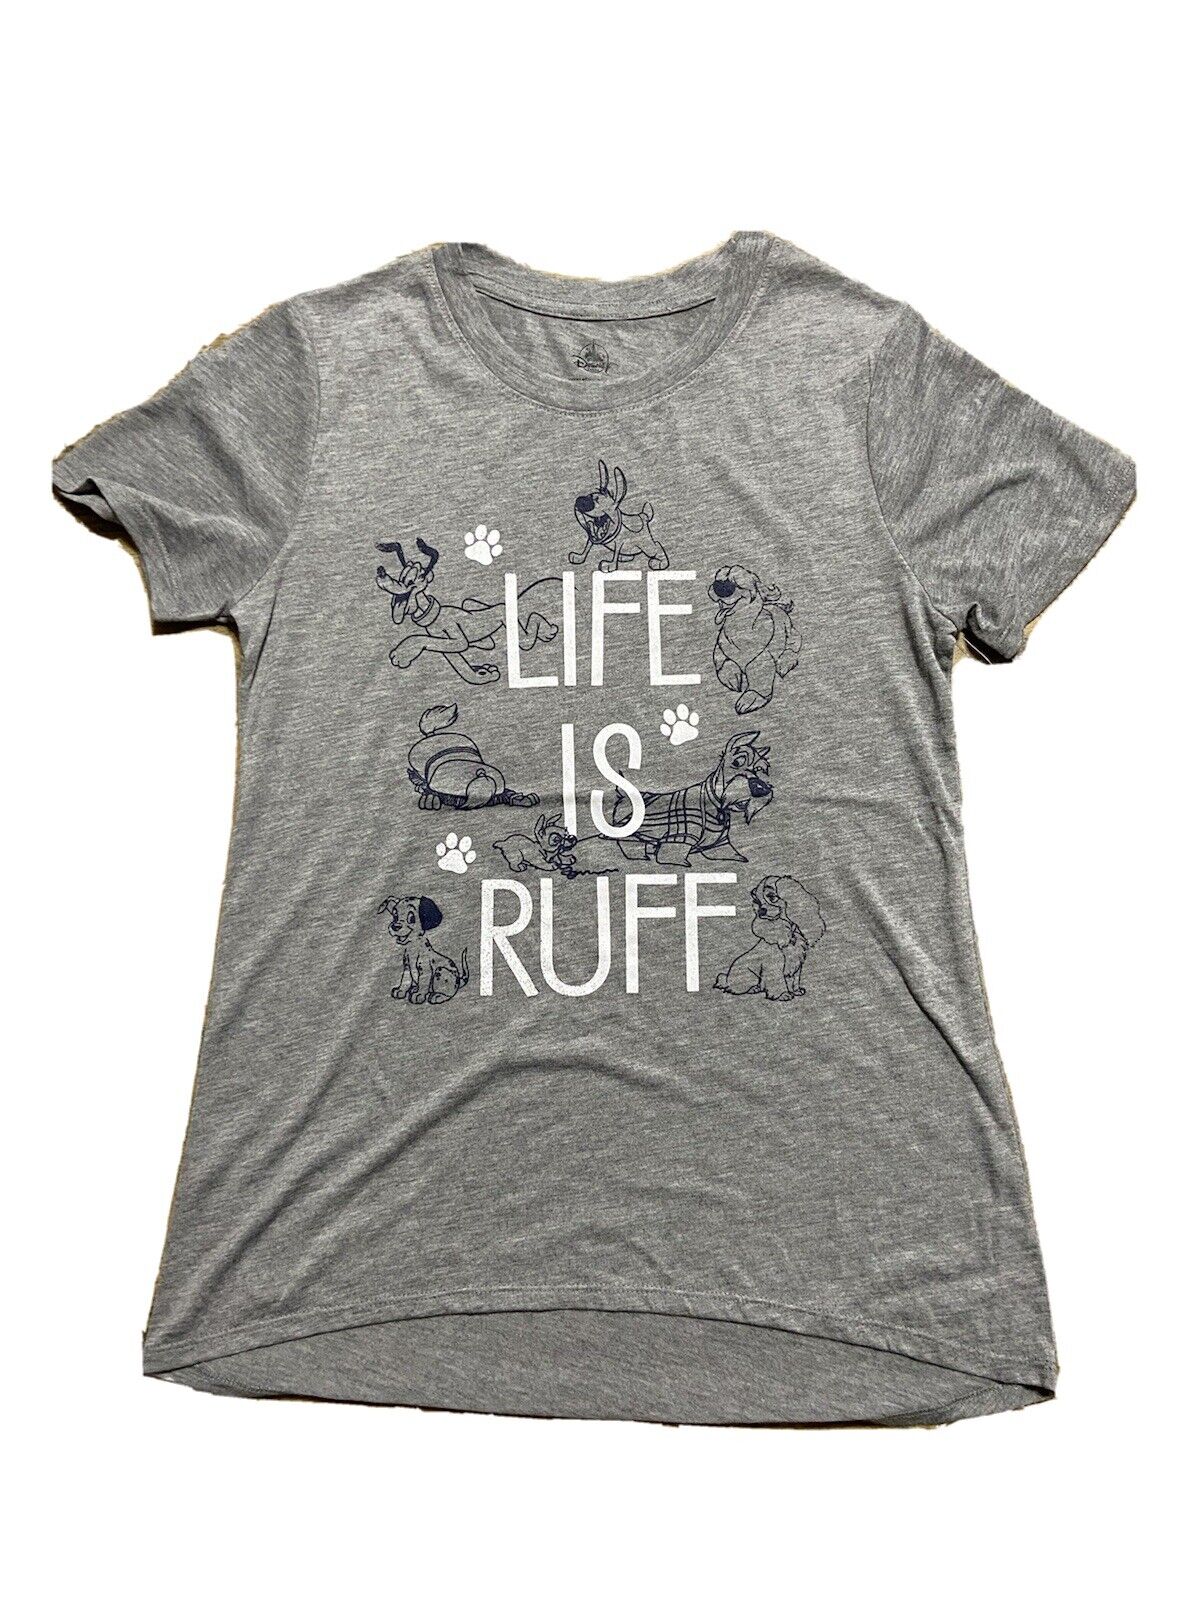 NEW Disney Parks Disney Dogs “Life Is Ruff” Women’s Grey T-shirt Small Pluto NWT